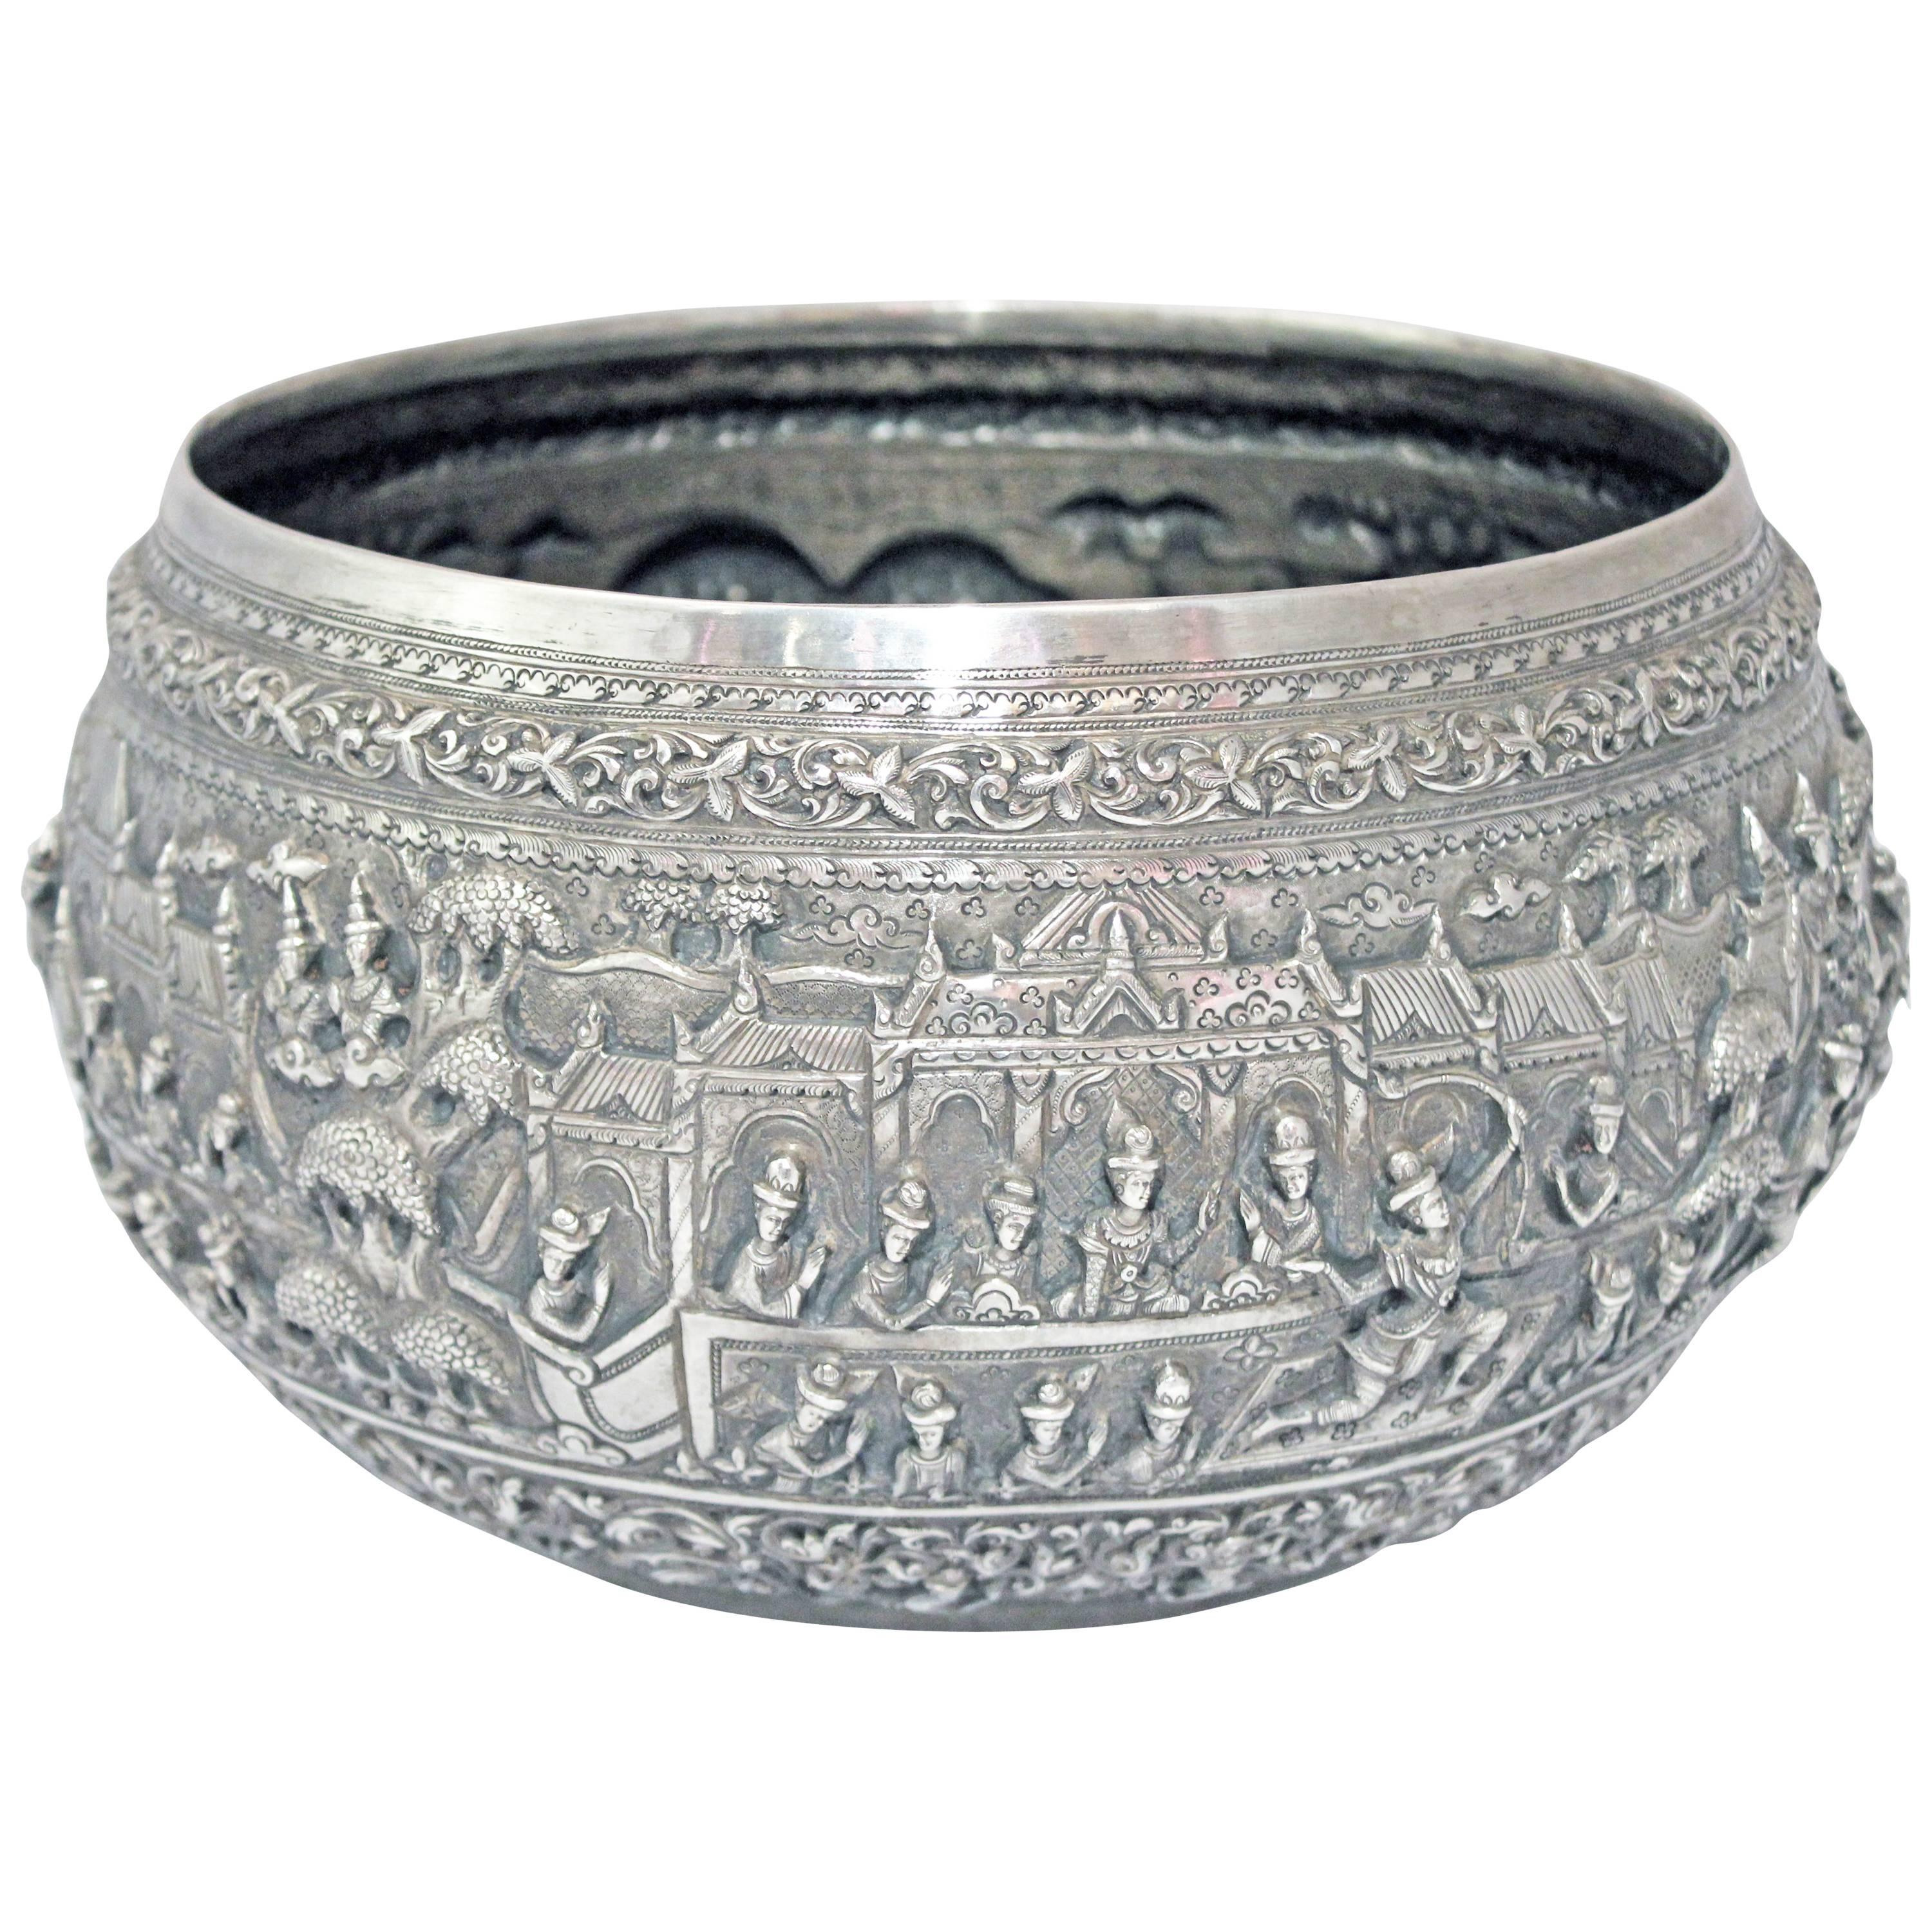 Solid Silver Hand-Worked Burmese Ceremonial Bowl, Jataka Scenes in Relief, Shan 